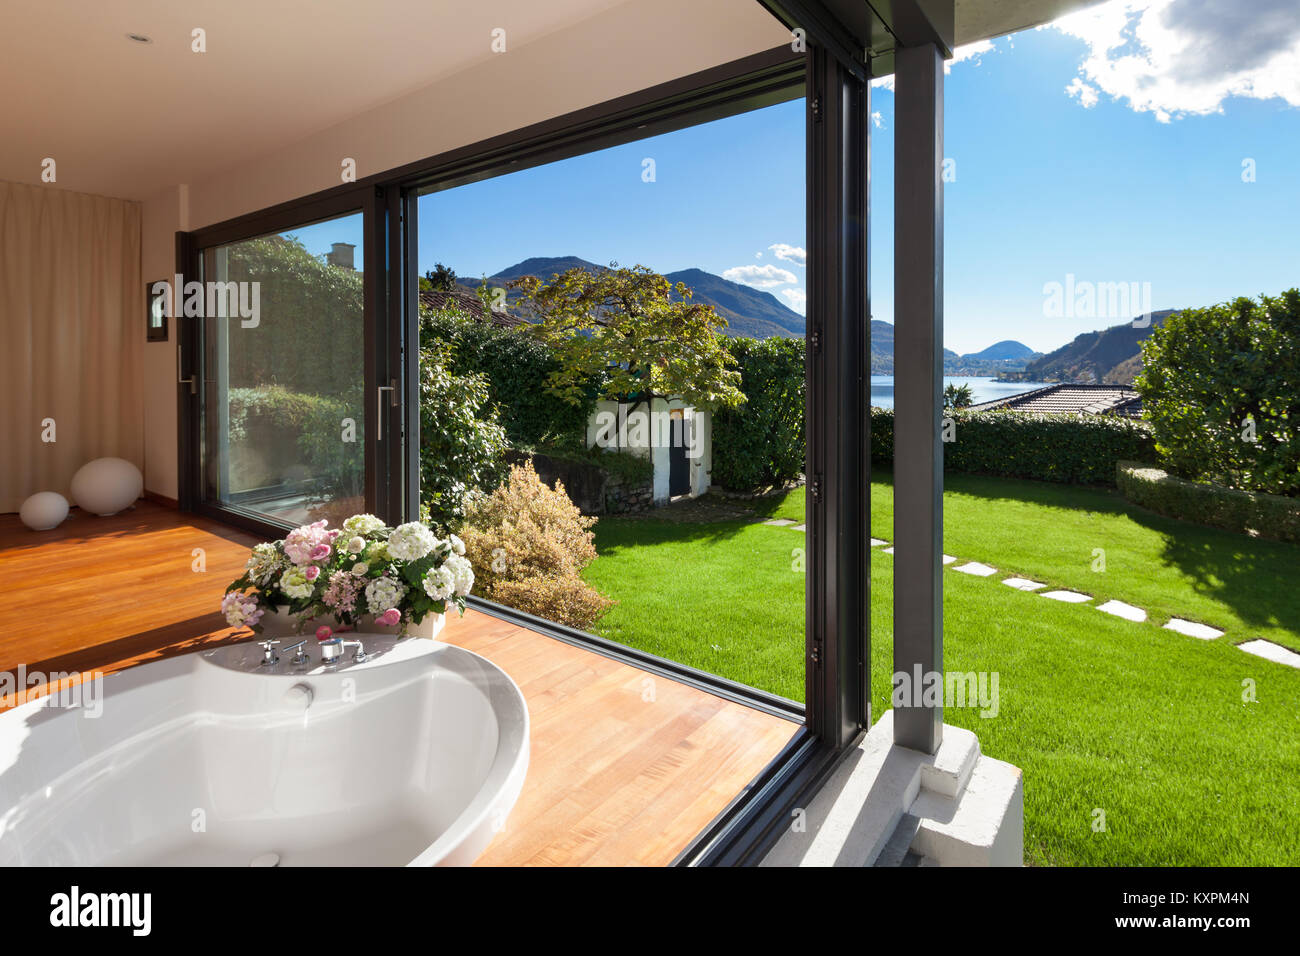 Comfortable bathroom with round bathtub, windows overlooking the garden Stock Photo